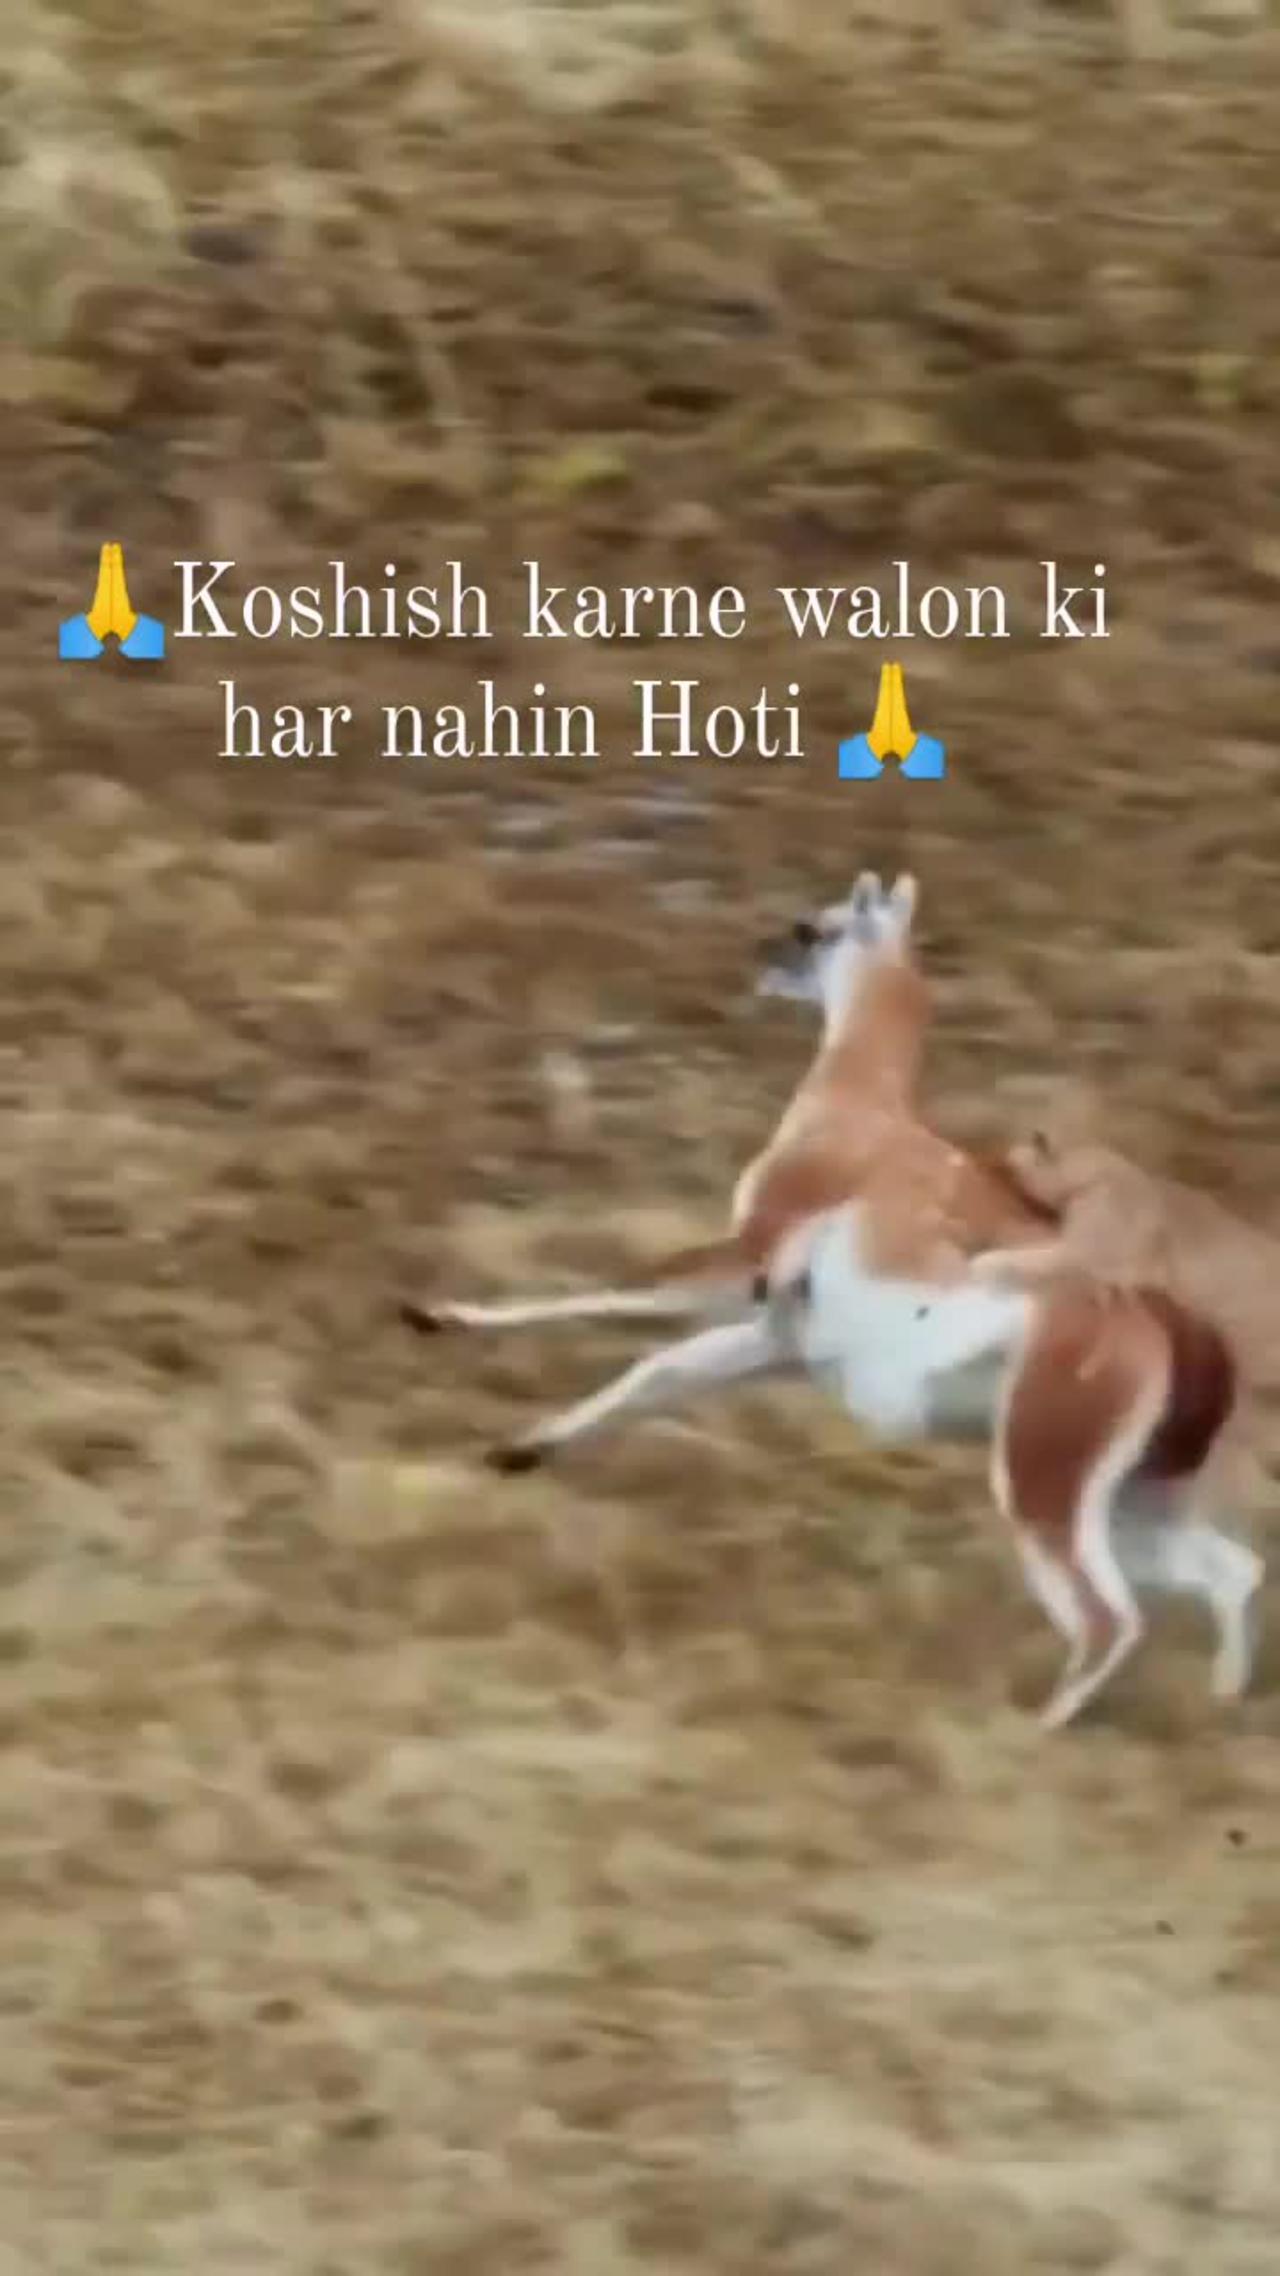 Best animal video on internet